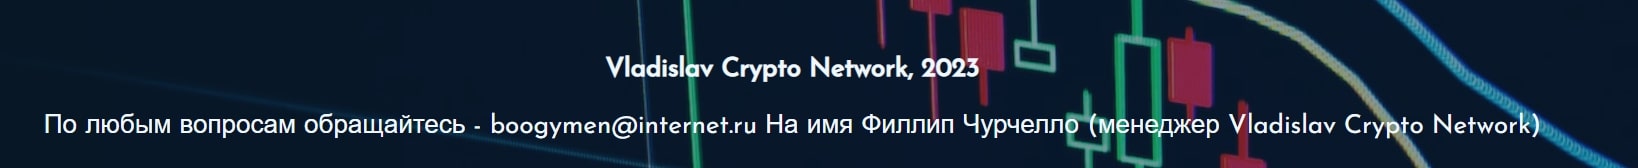 Vladislav Crypto сайт